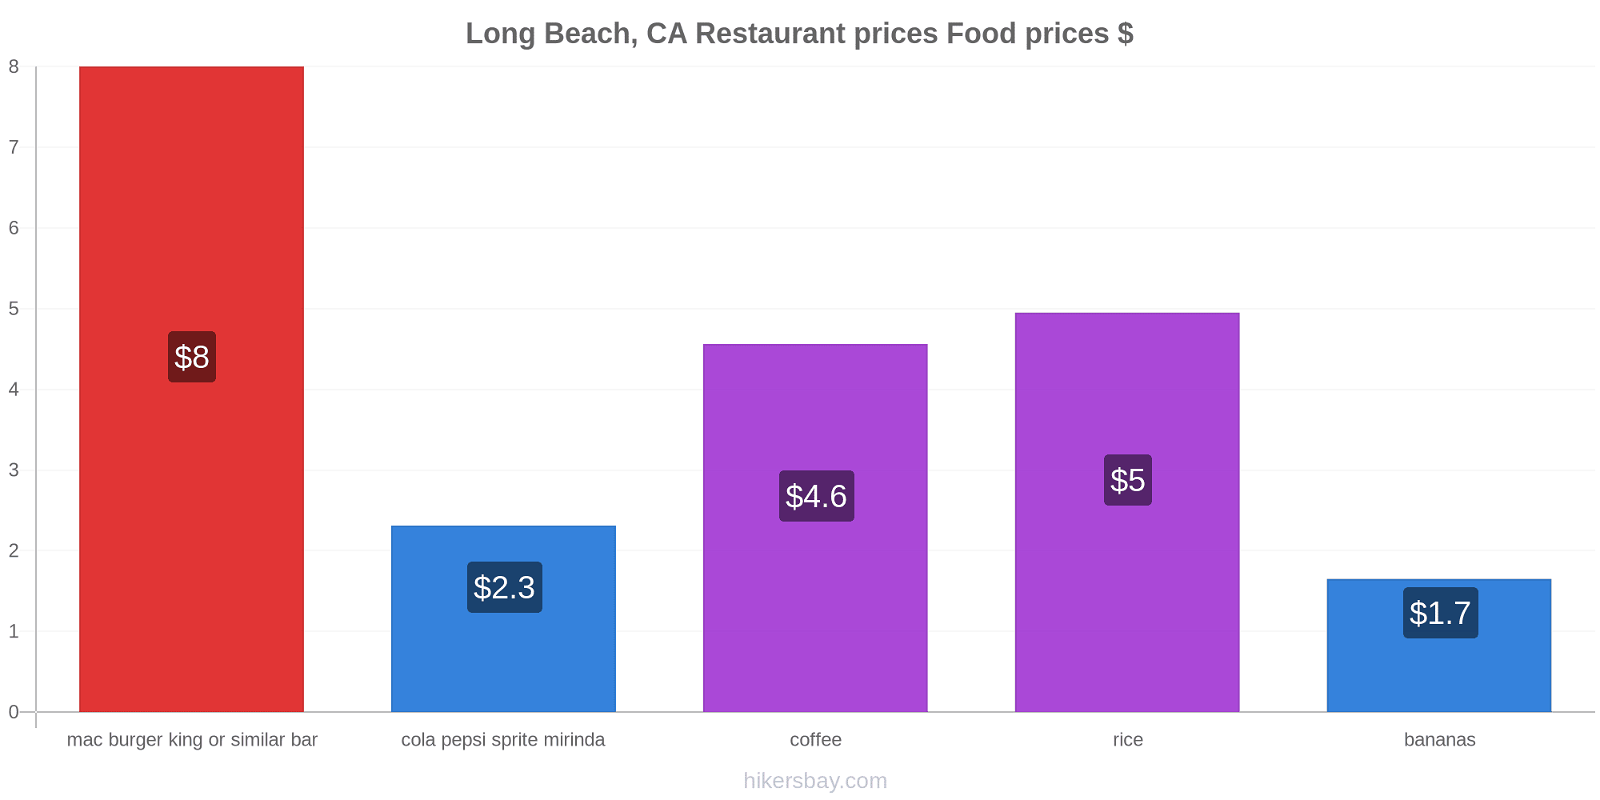 Long Beach, CA price changes hikersbay.com